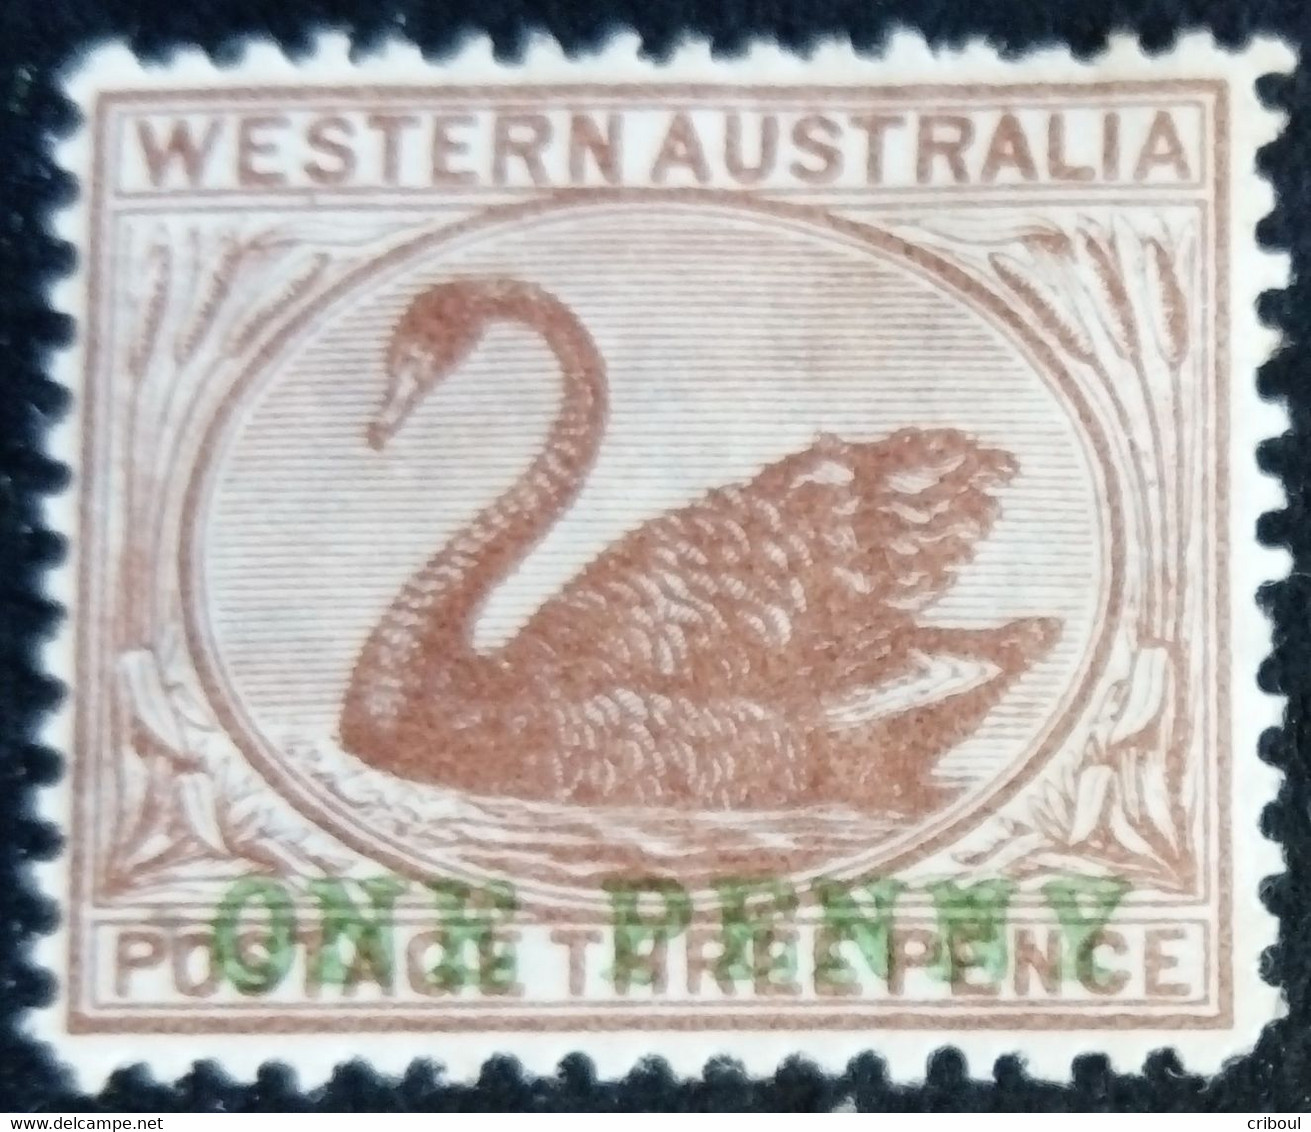 Australie Occidentale Western Australia 1893 Filigrane Couronne CC Watermark Crown CC Surchargé ONE PENNY Yvert 51 * MH - Schwäne